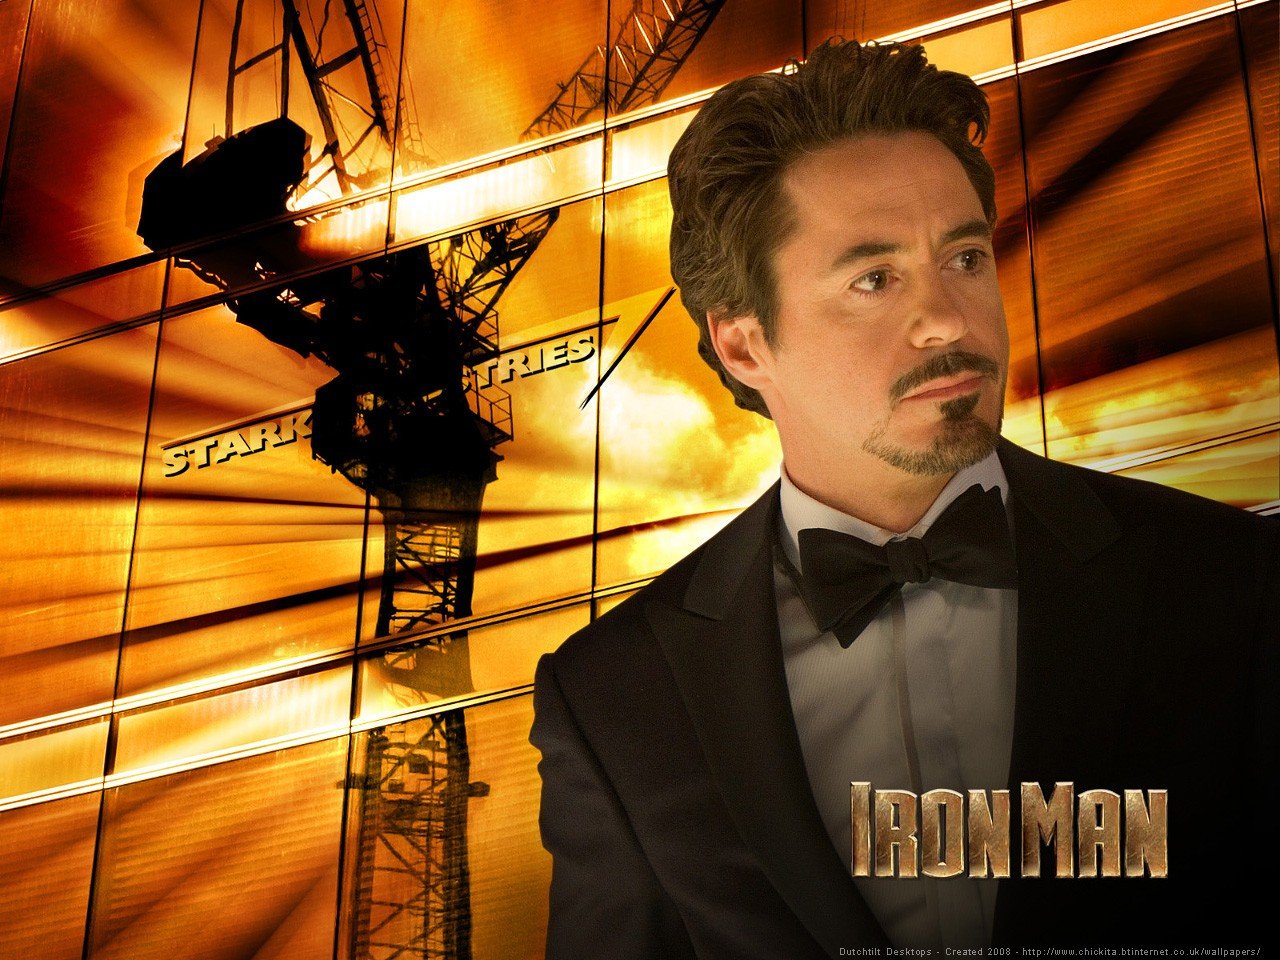 Desktop Wallpapers - Iron Man, Robert Downey Jr. - Movie | Free ...